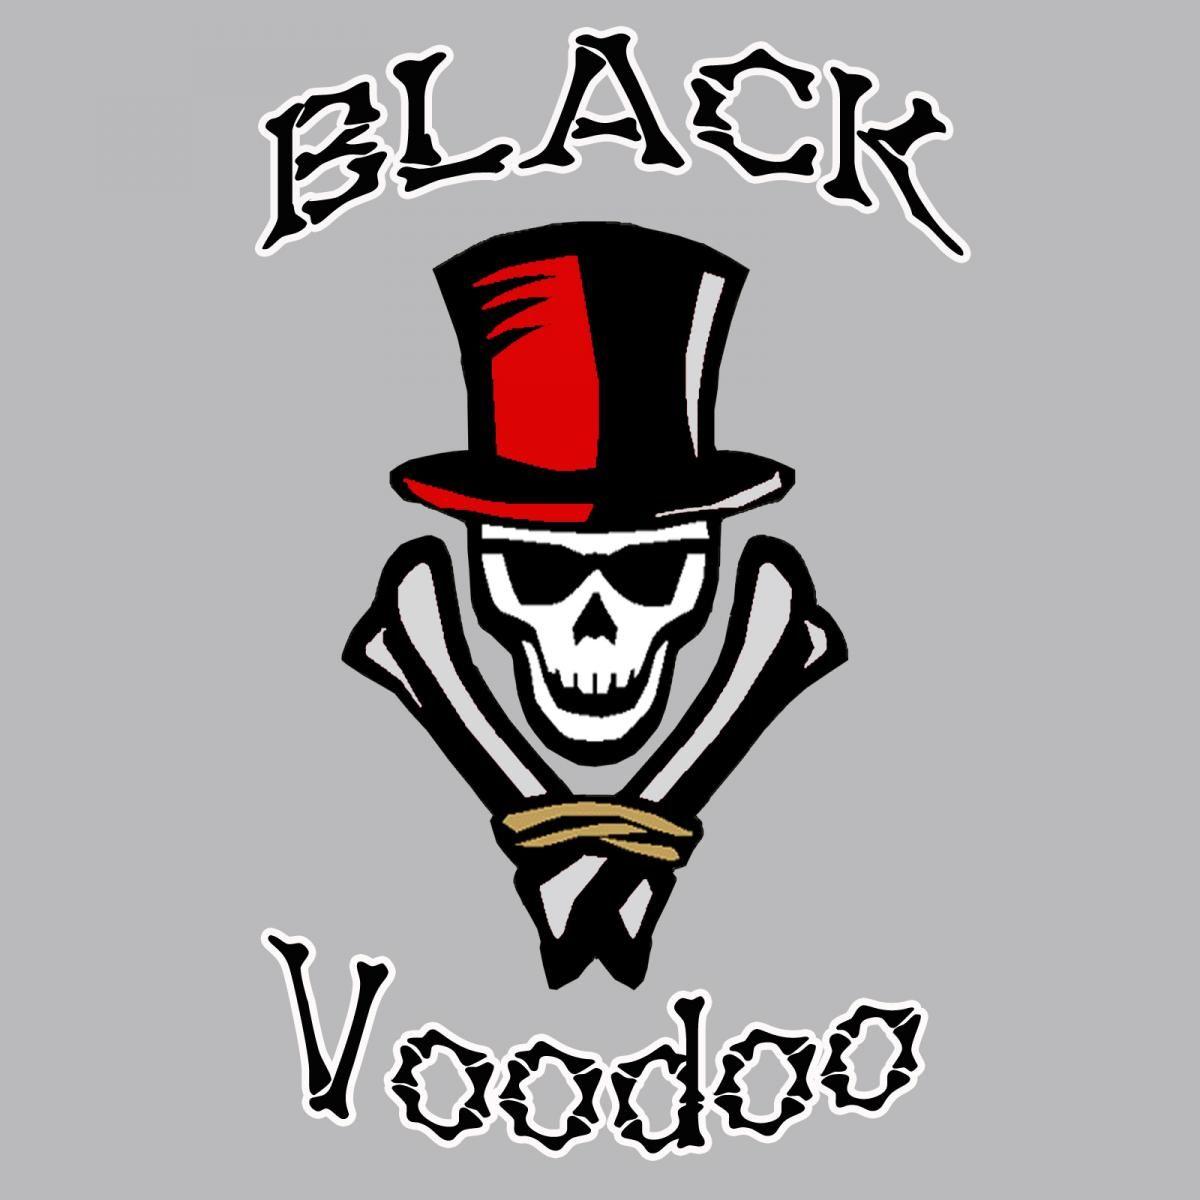 Voodoo Logo - Photo Borrowed from New Orleans Voodoo logo in the album Jack's R